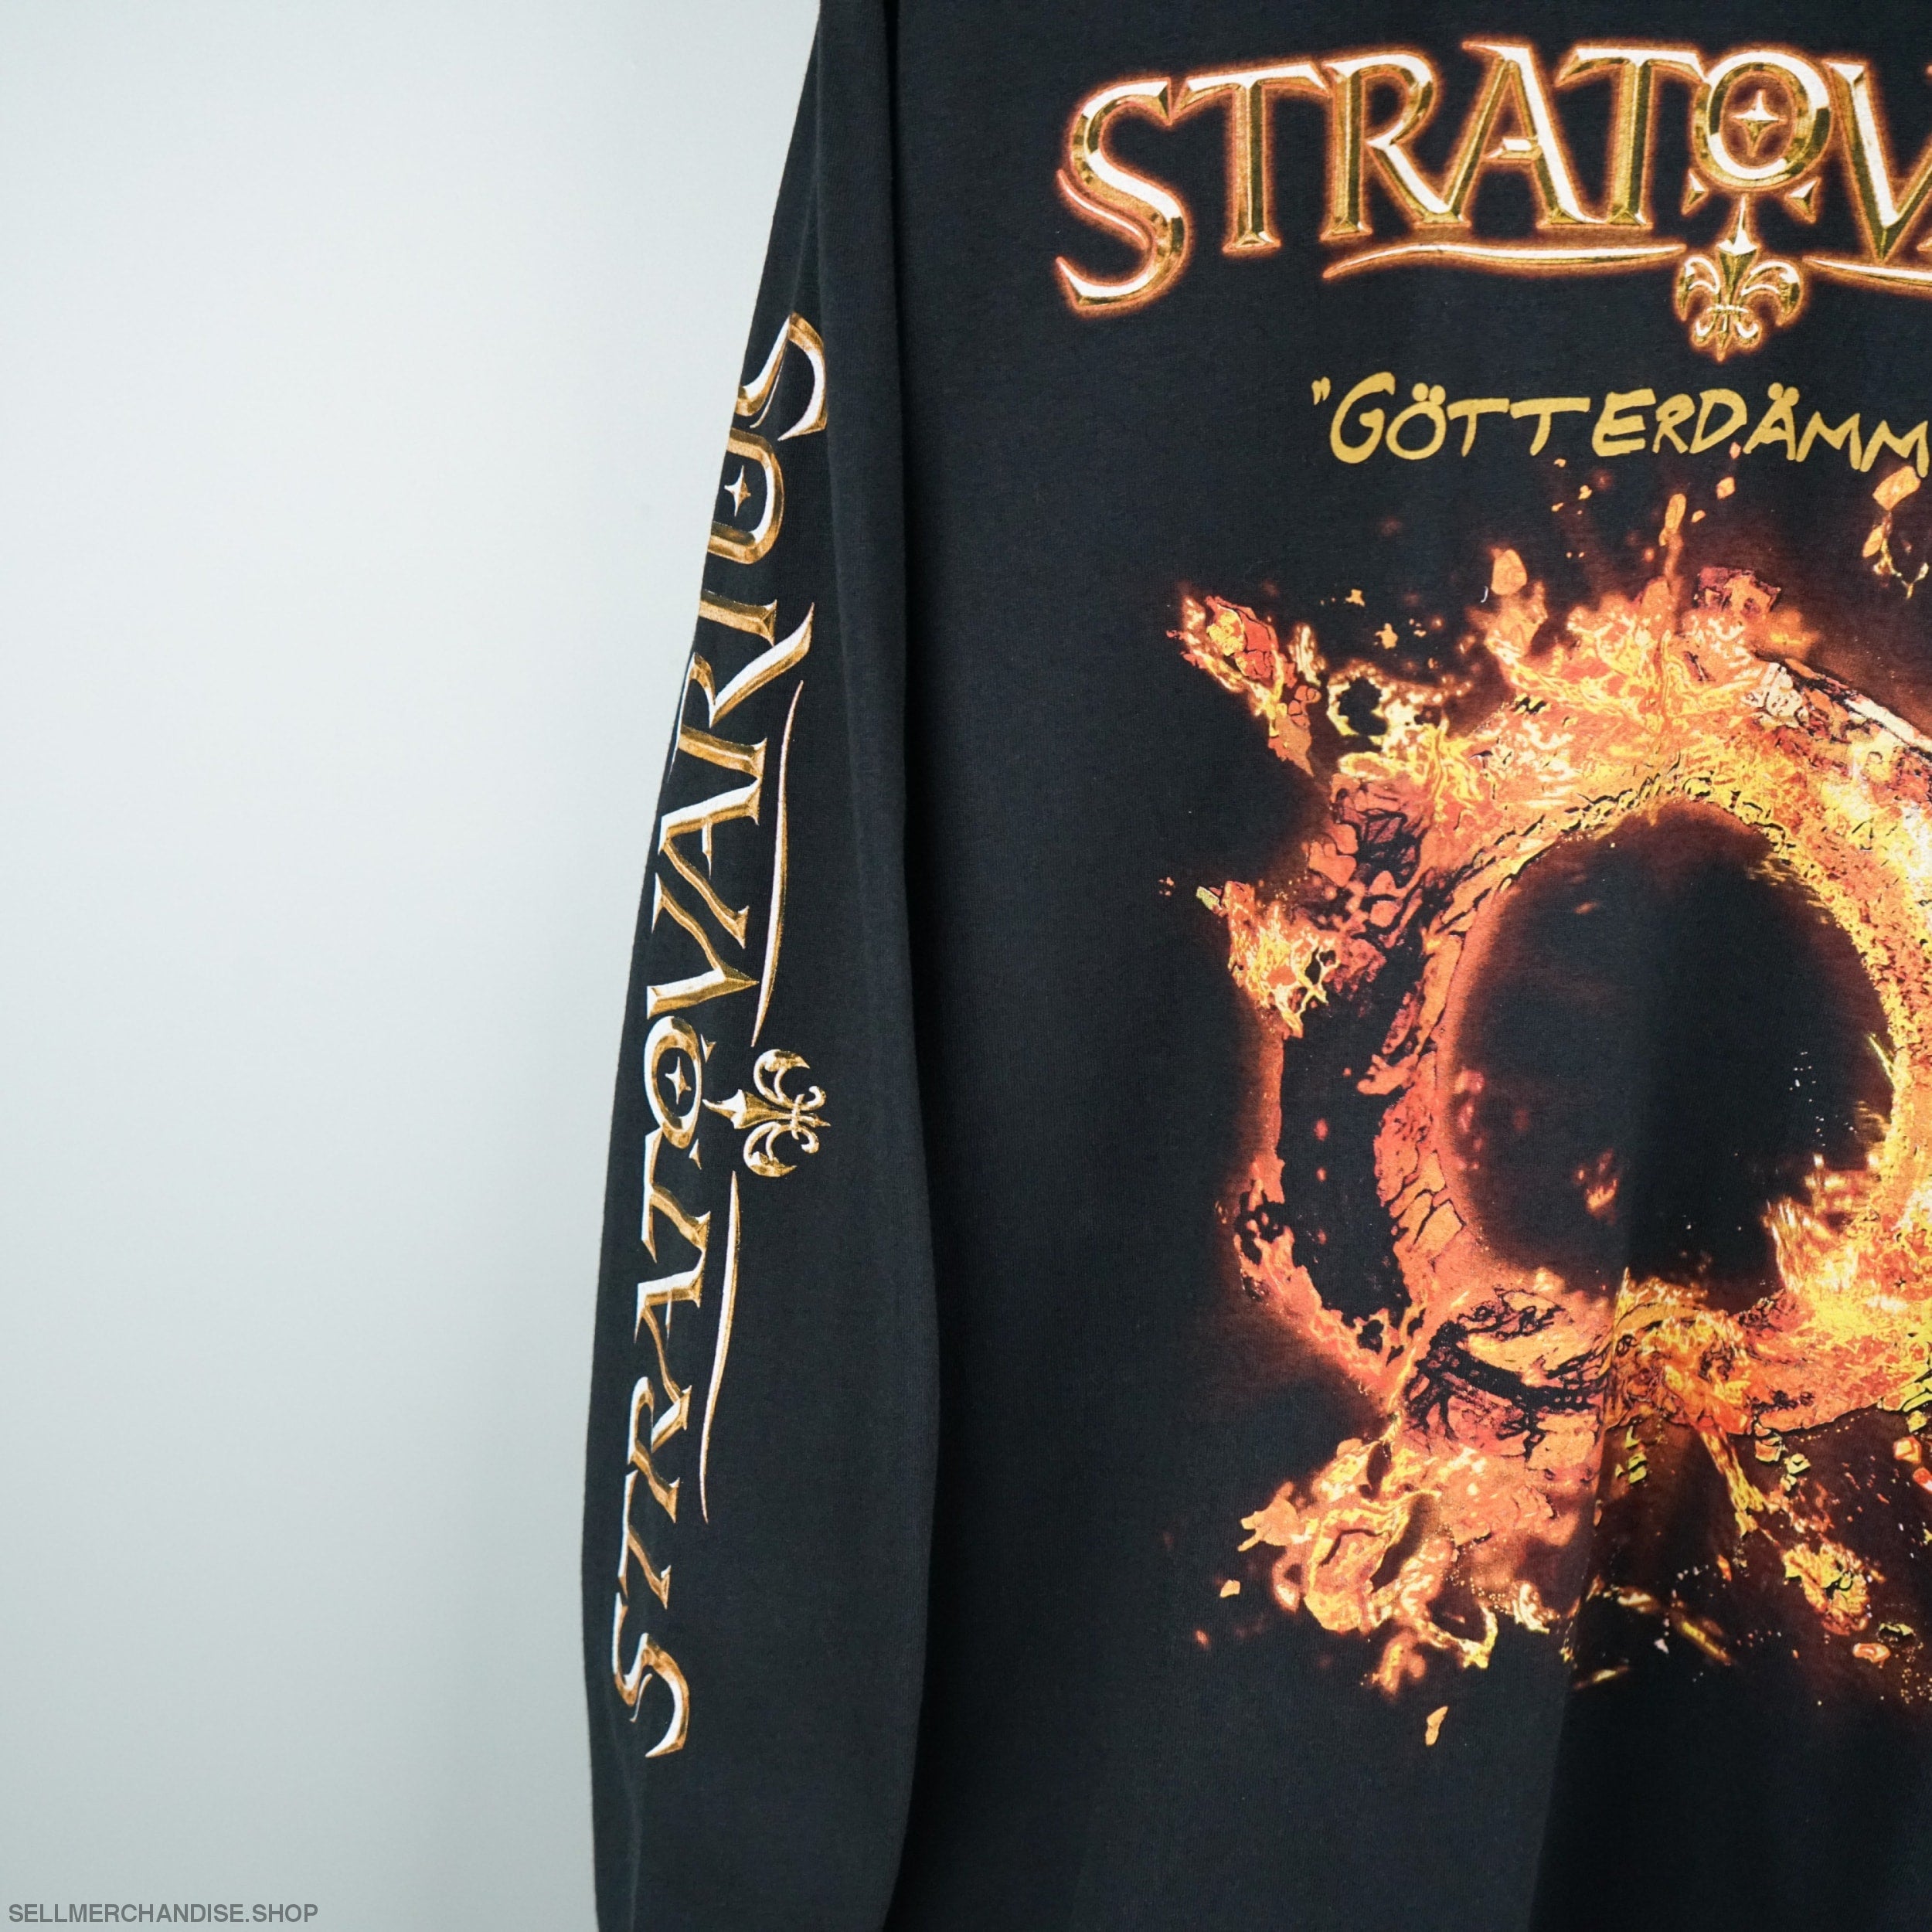 New Stratovarius The Chosen One Album Cover Men's Black T-Shirt